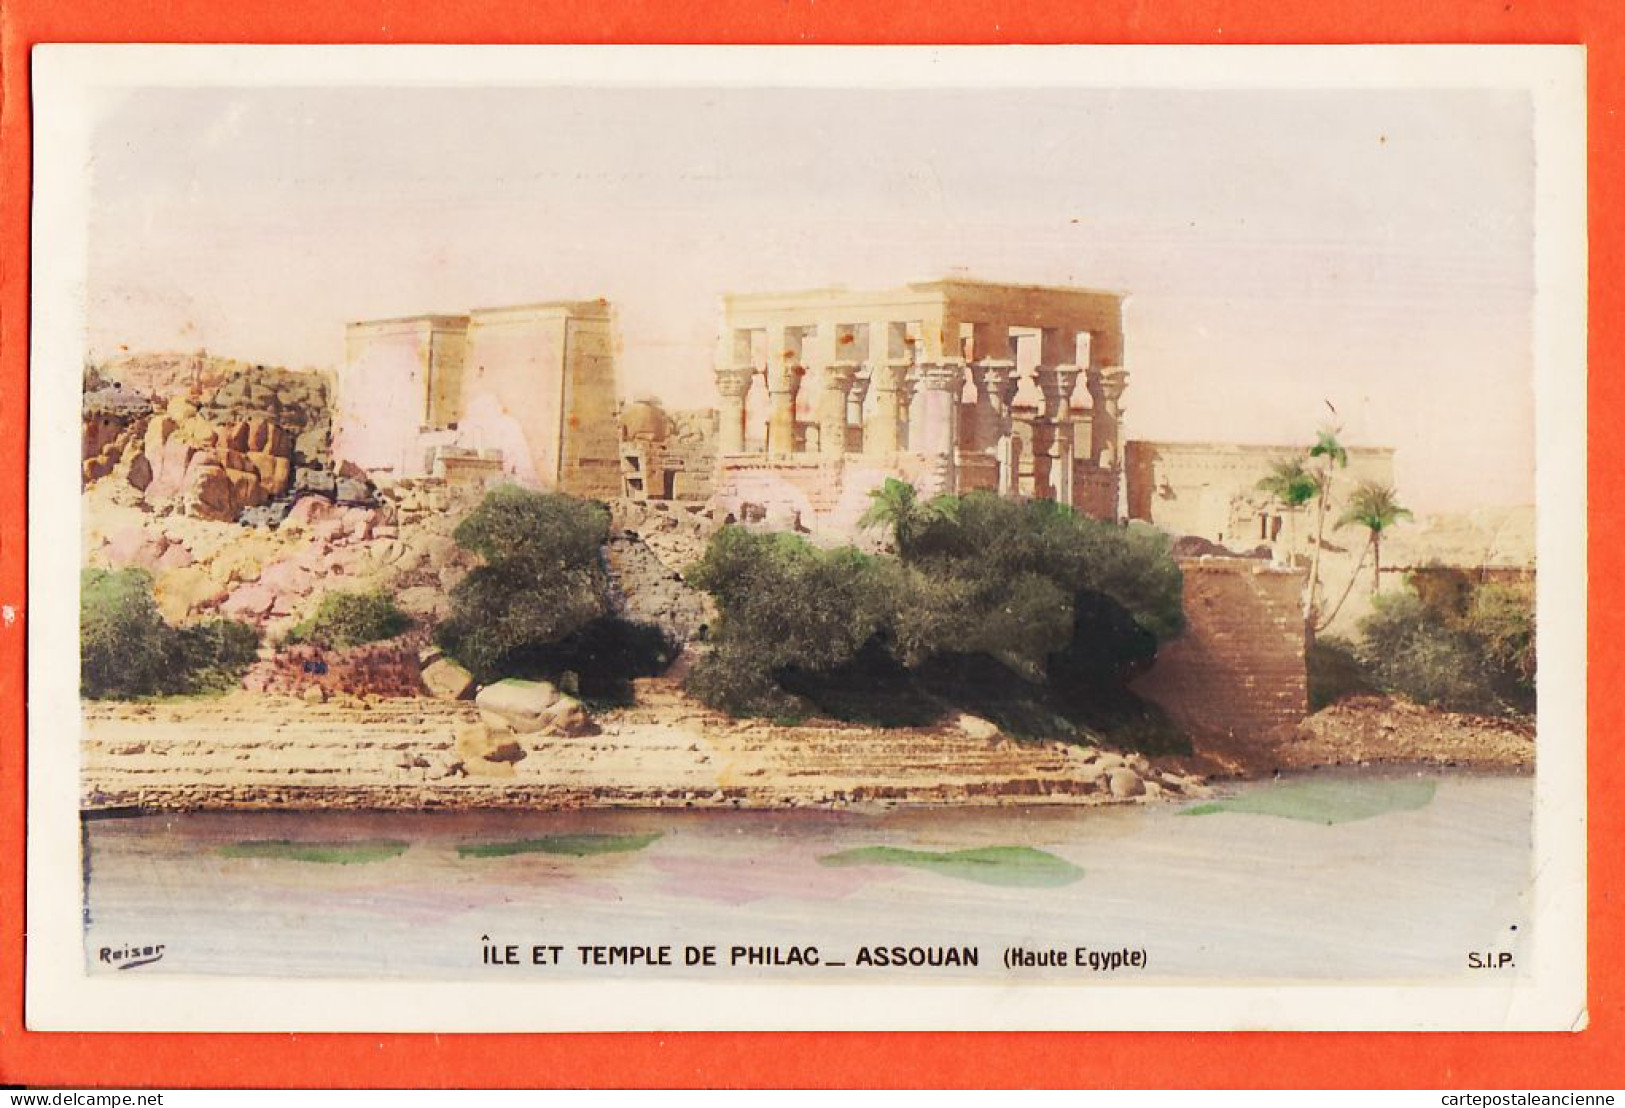 29577 / ⭐ ◉ ASSOUAN ILE Temple PHILAC (1) Ägypten Island Philae Kiosk Egypte Egypt 1905s Photo-Bromure REISER S.I.P - Aswan